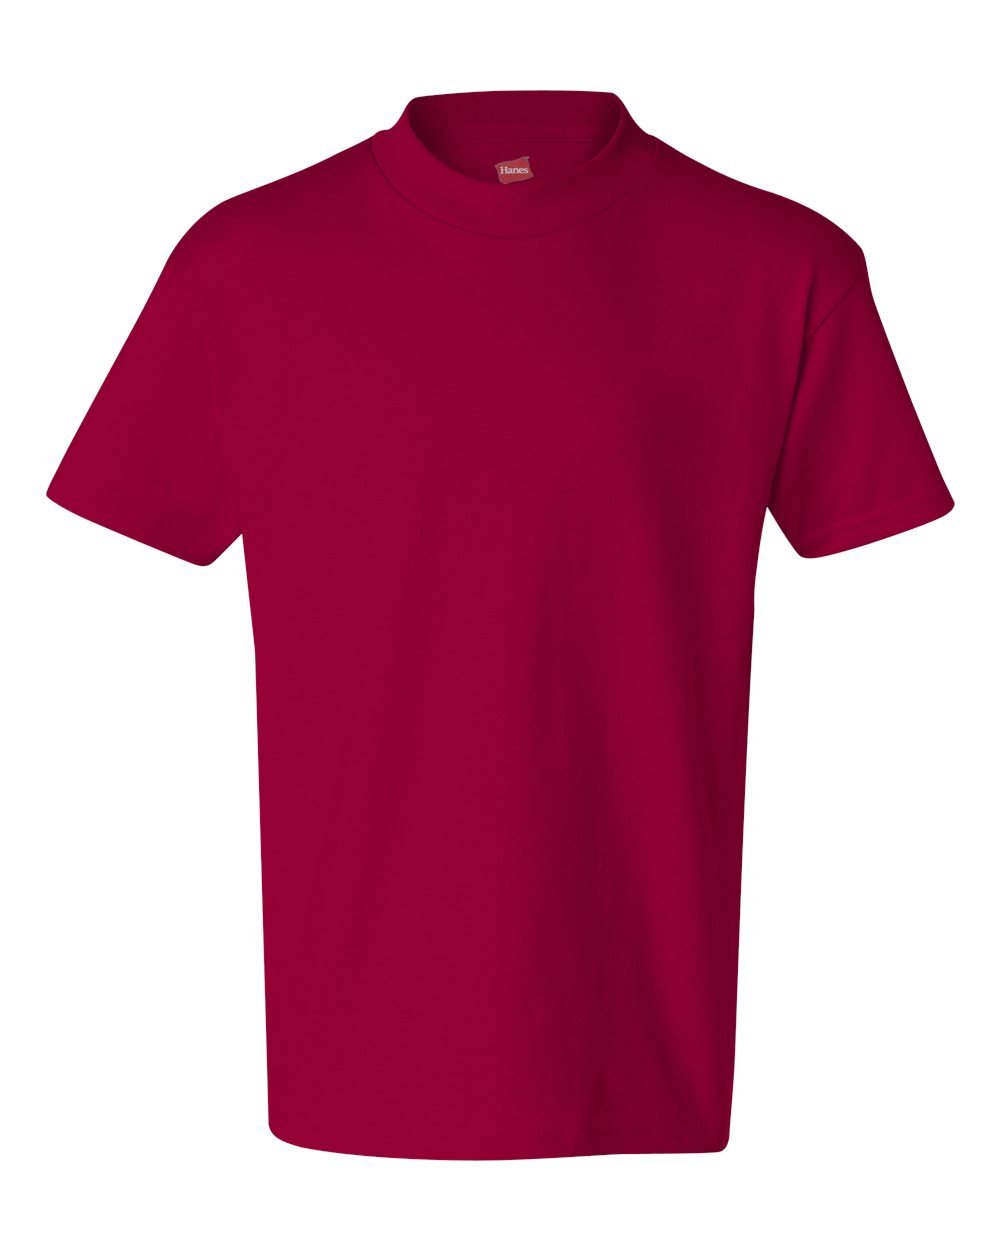 Hanes boys Cotton T-Shirt(5450)-Deep Red-XS